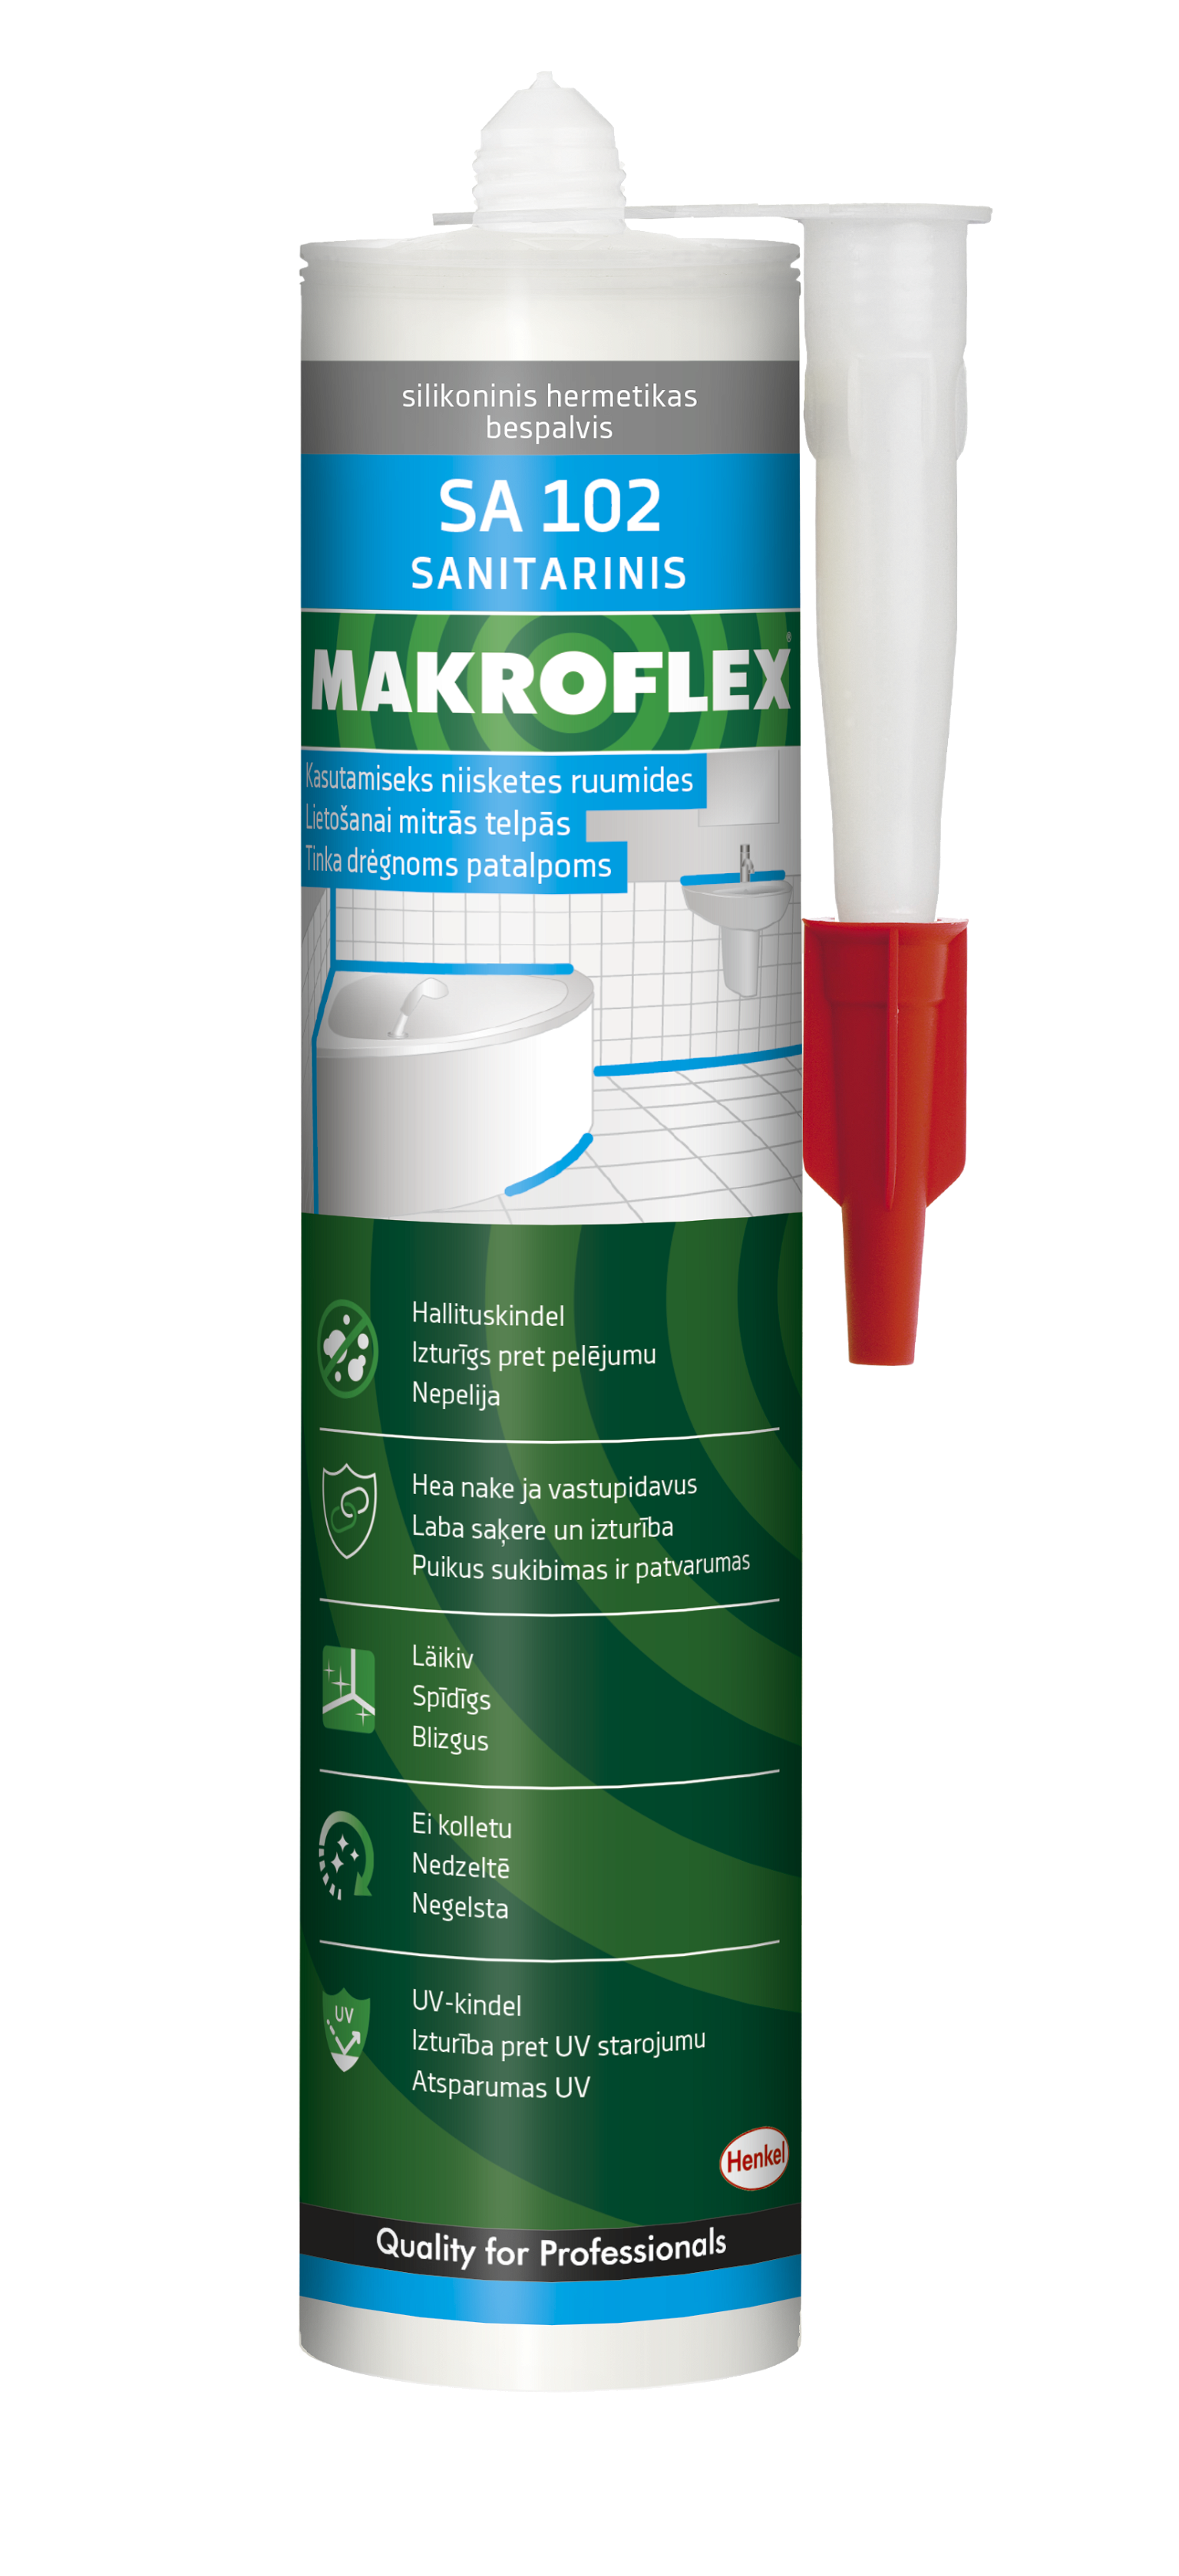 Sanitarinis silikoninis hermetikas MAKROFLEX SA102, bespalvis, 300 ml